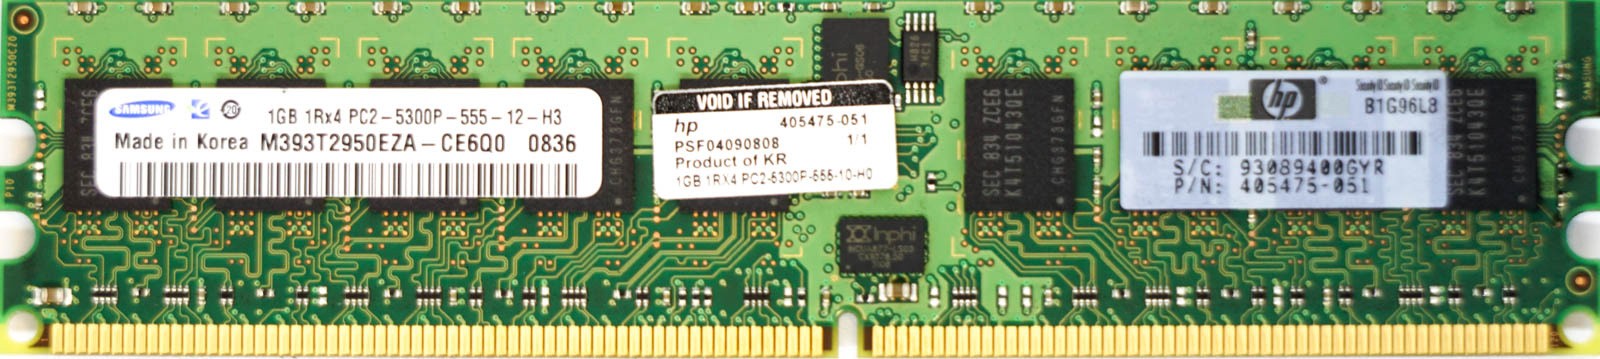 HP (405475-051) - 1GB PC2-5300P (DDR2-667Mhz, 1RX4)